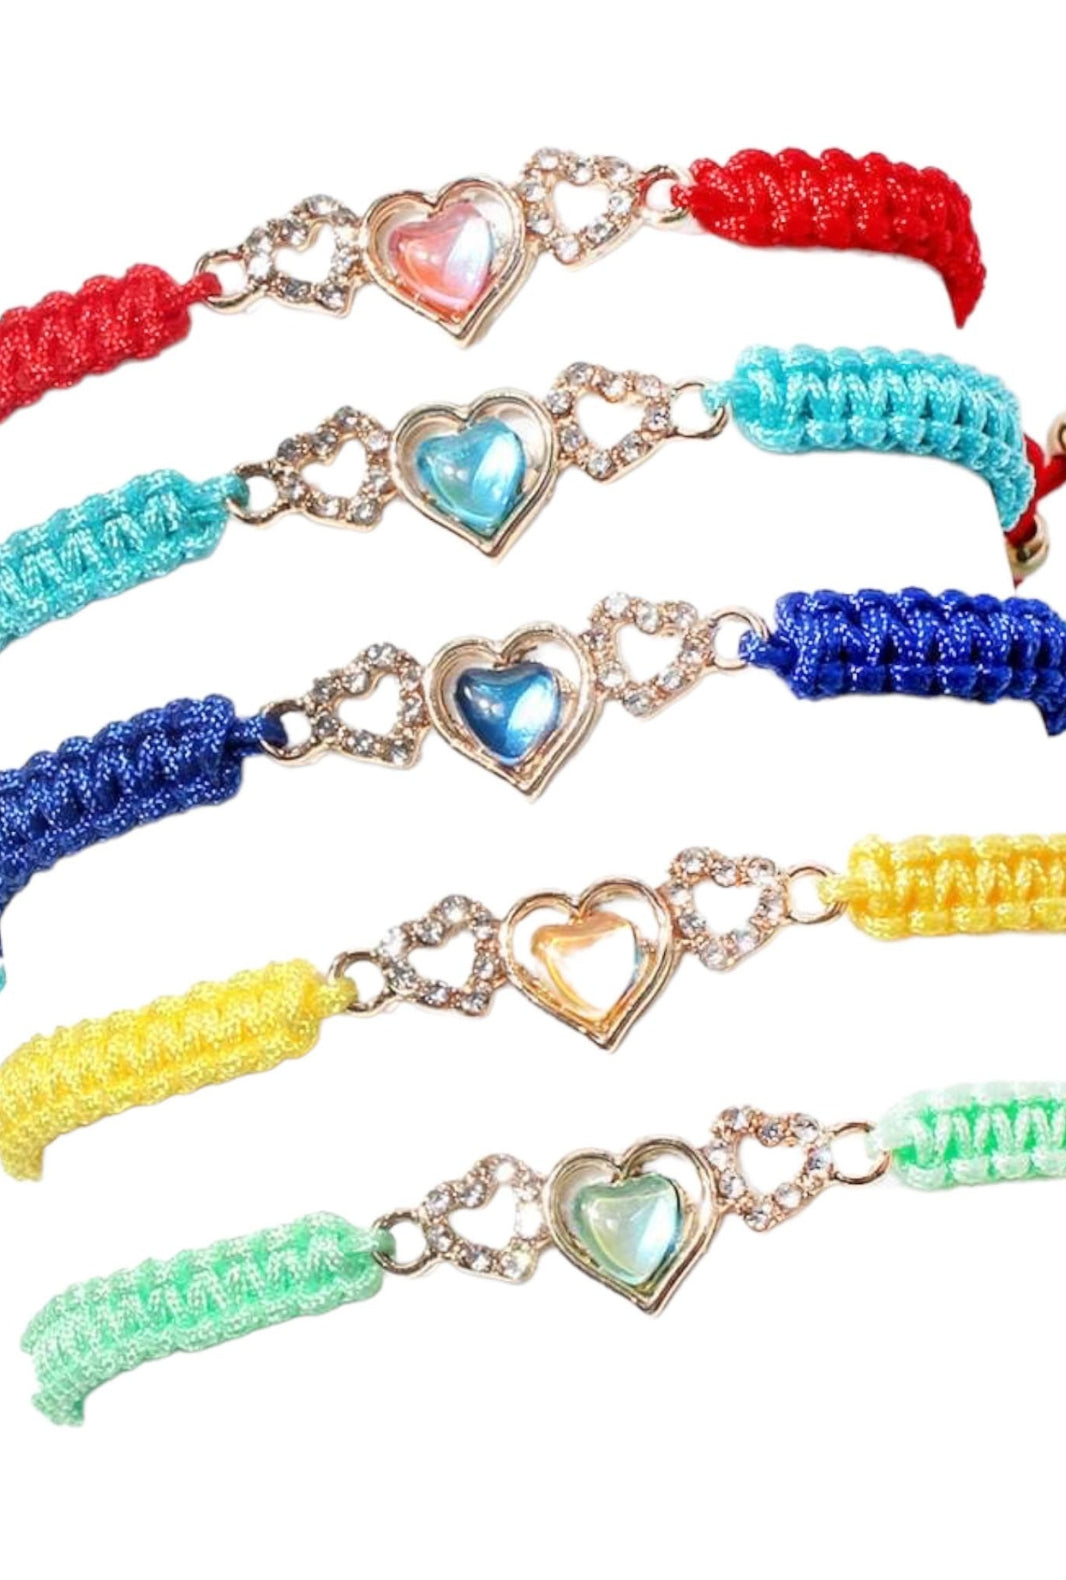 Great Choice Products Girls Charm Bracelet Making Kit - Kids